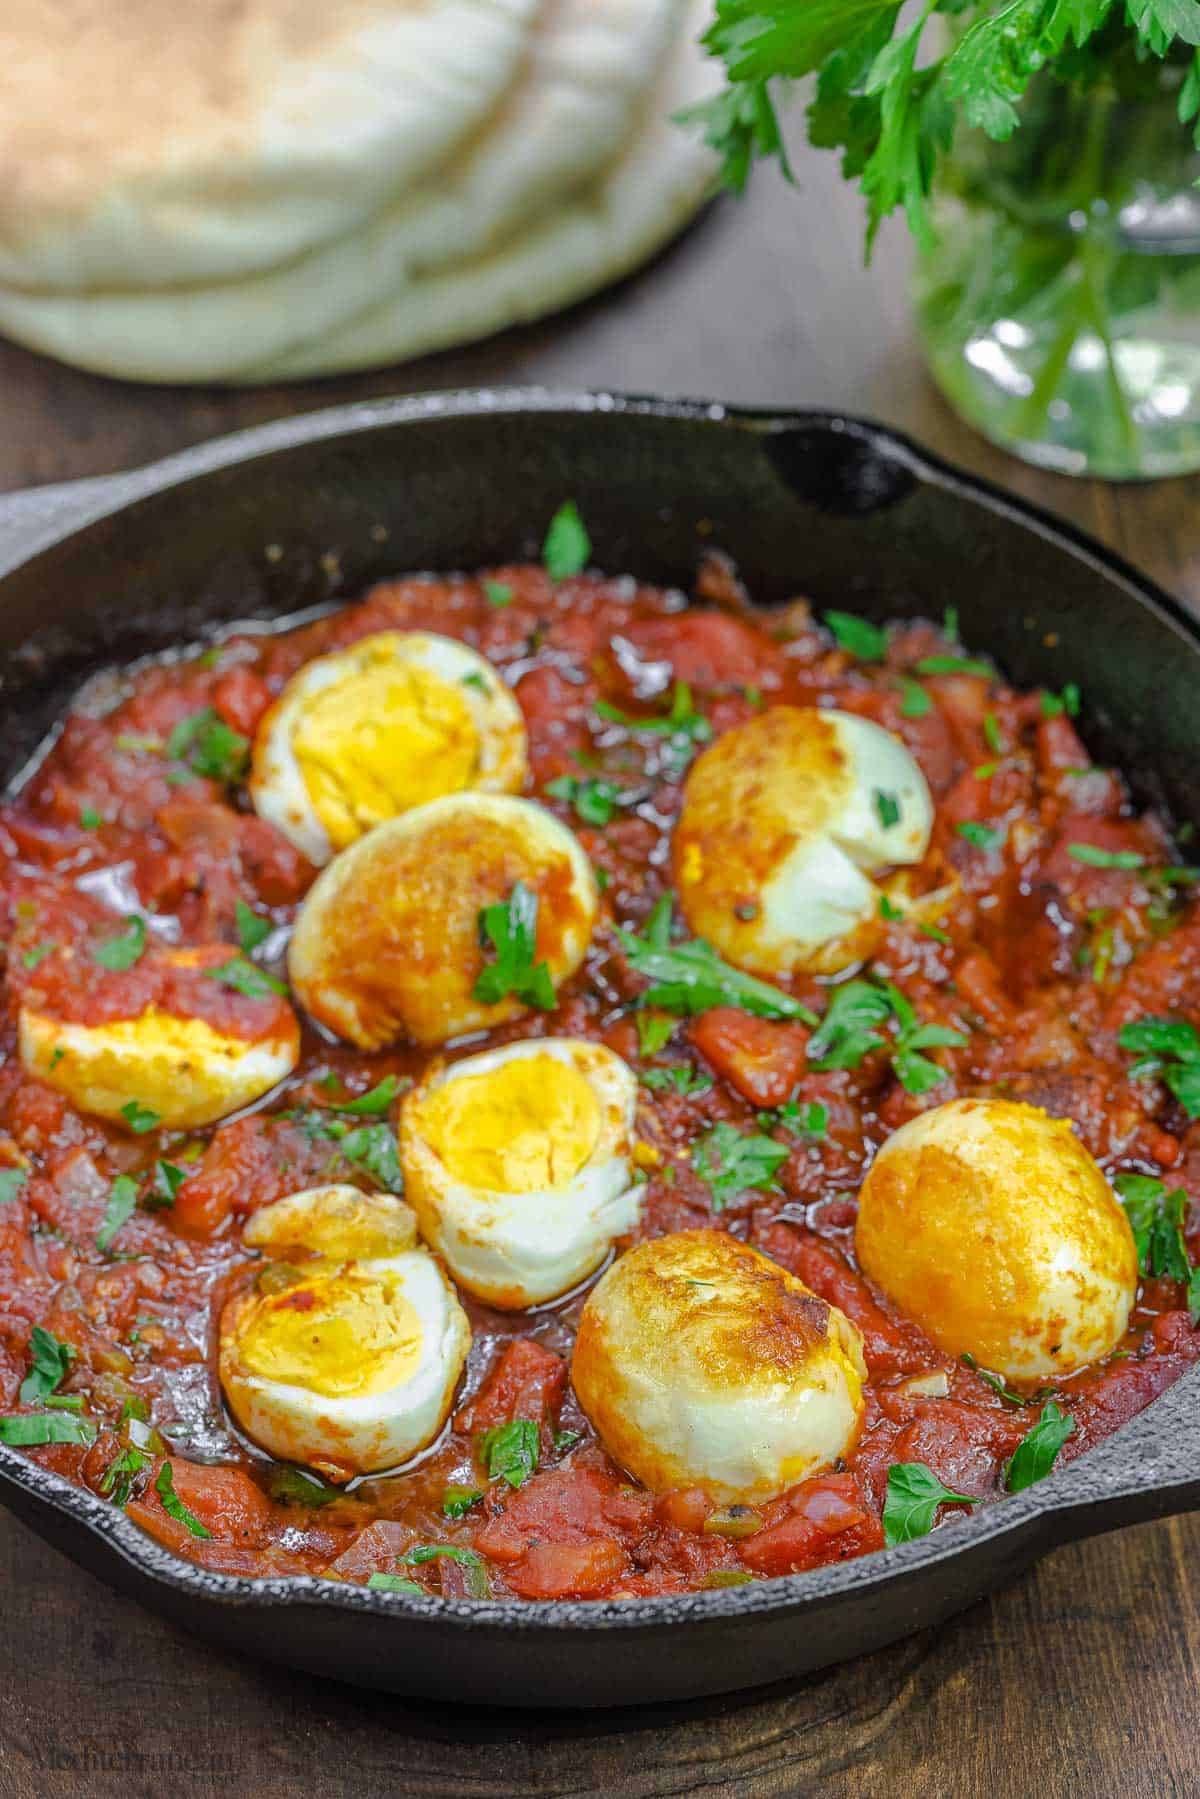 https://www.themediterraneandish.com/wp-content/uploads/2022/07/eggs-fra-diavolo-in-purgatory-recipe-1.jpg